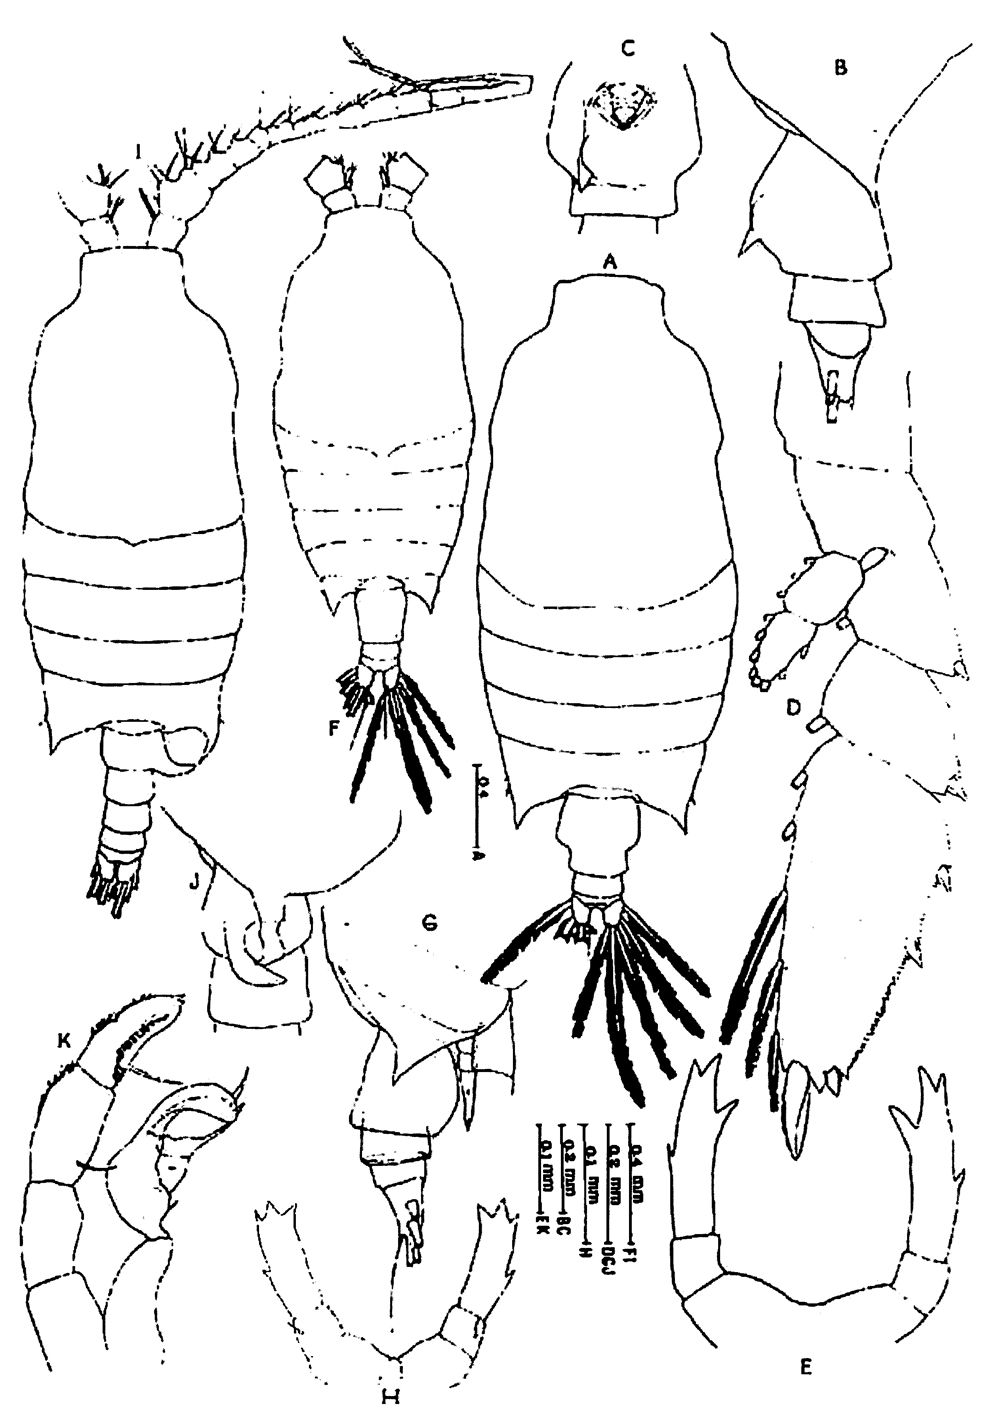 Espce Candacia curta - Planche 11 de figures morphologiques